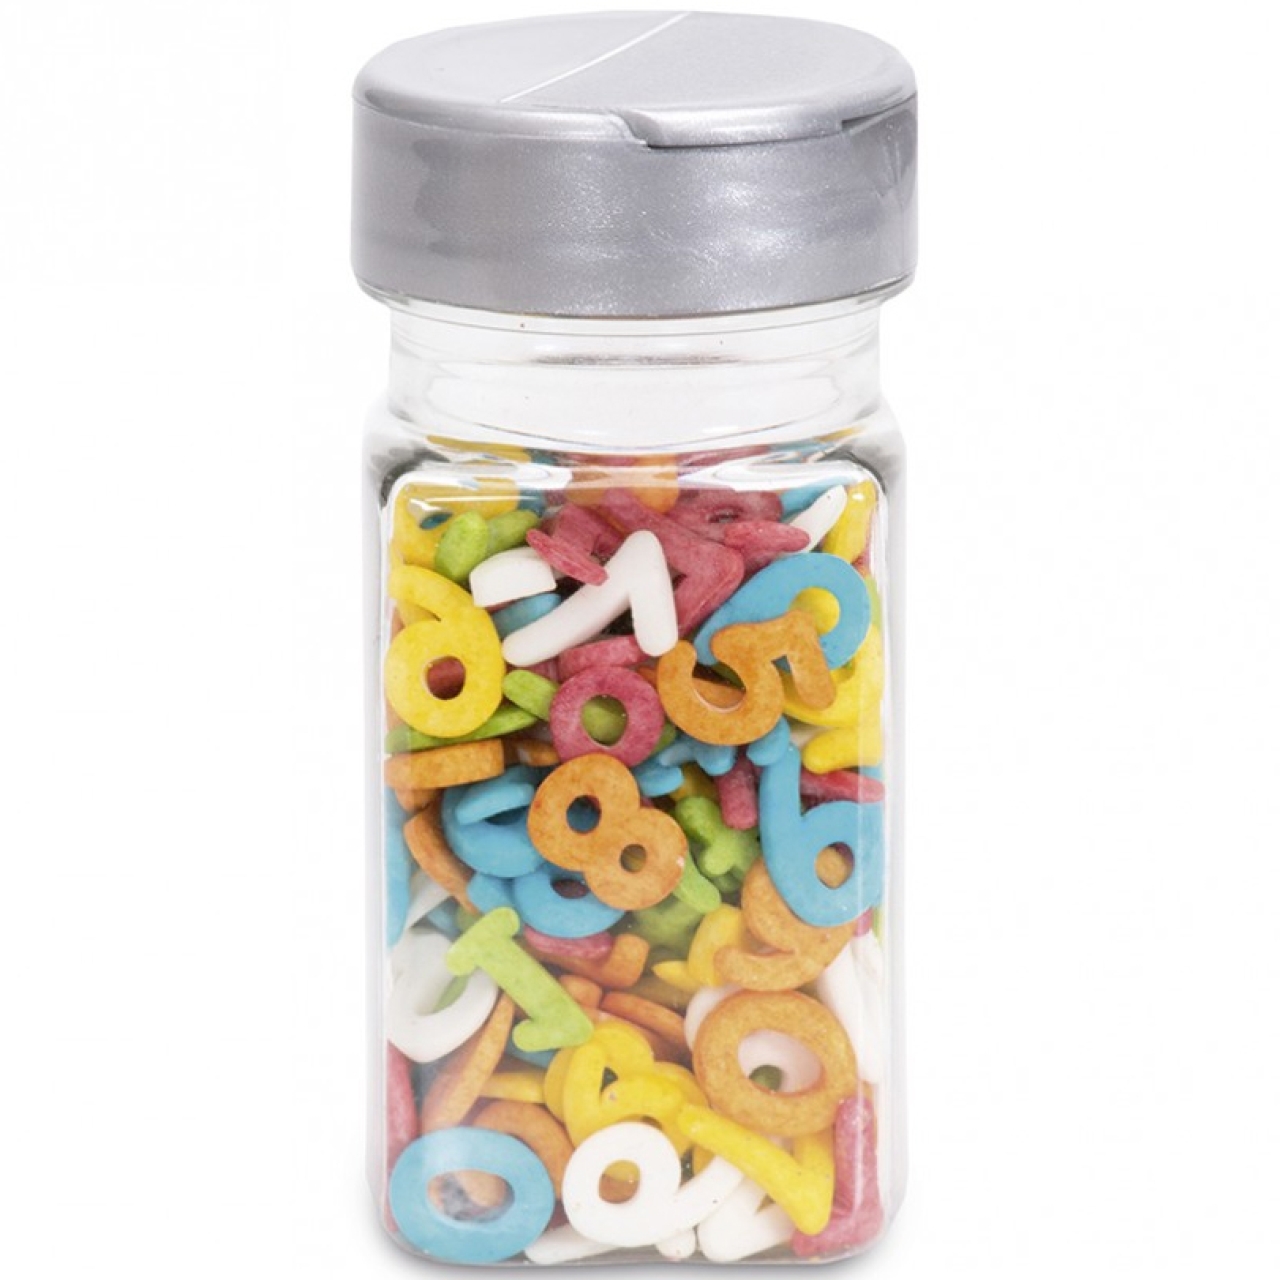 Sprinkles Zahlen-Mix 0-9 bunt 35 g